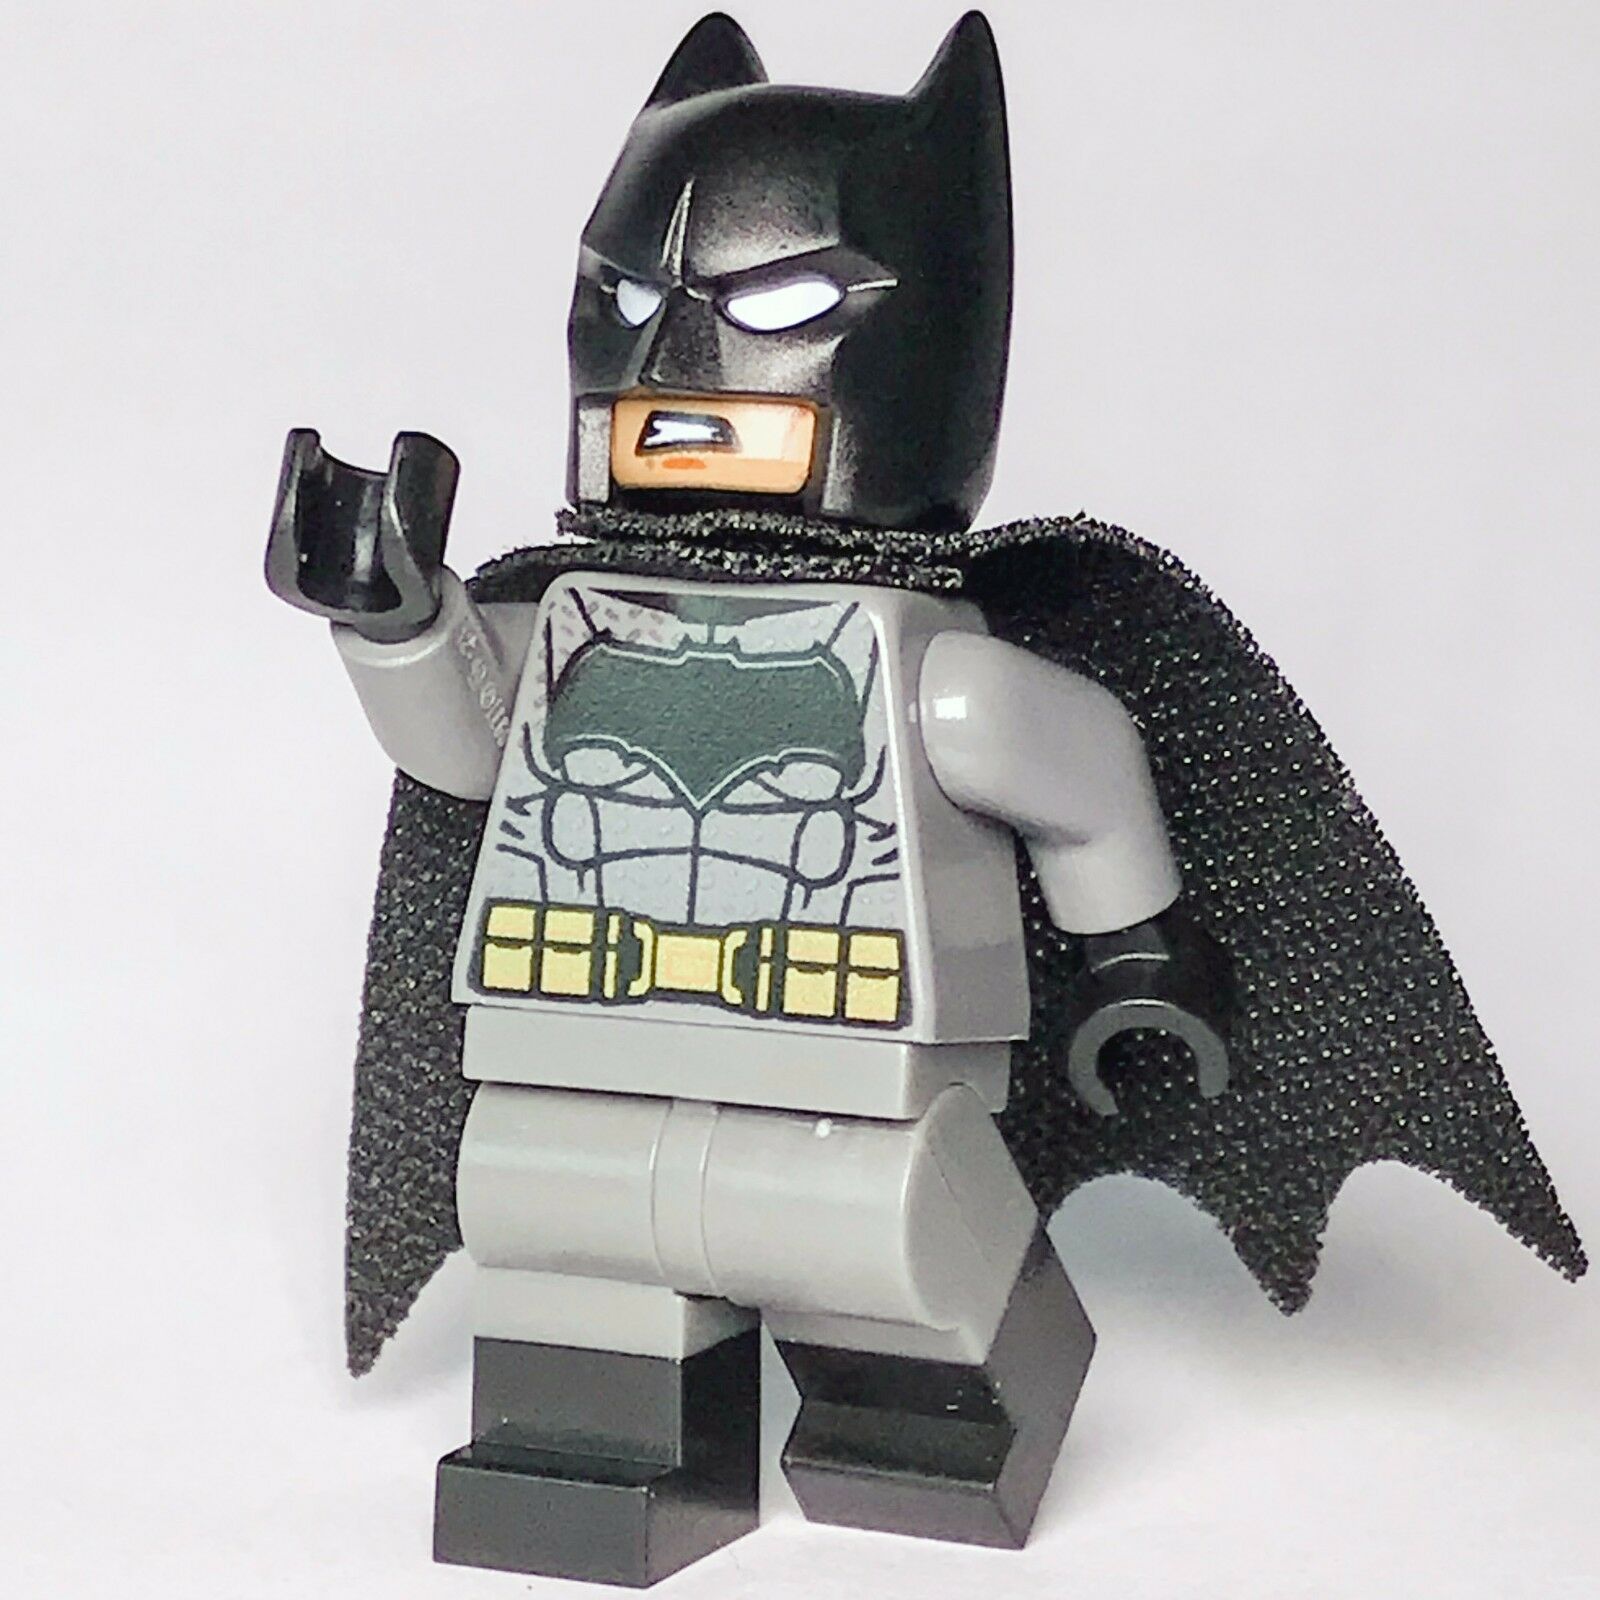 DC Super Heroes LEGO Batman Dawn of Justice Minifigure from sets 76046 76045 - Bricks & Figures